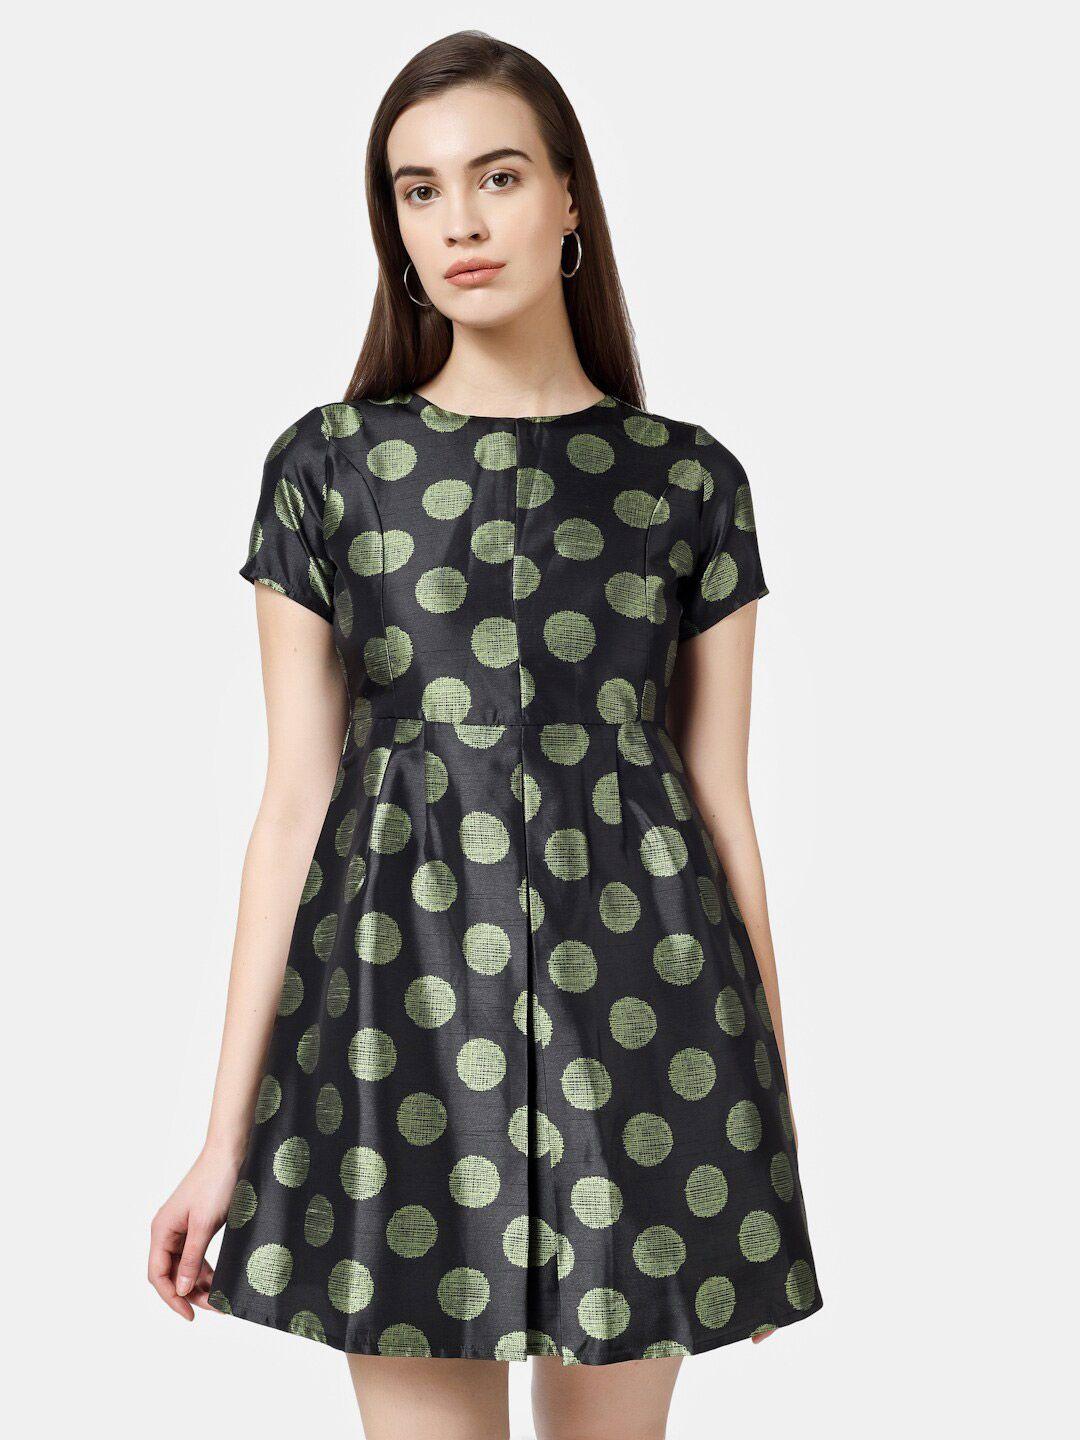 chanira la parezza polka dots printed boat neck a-line dress